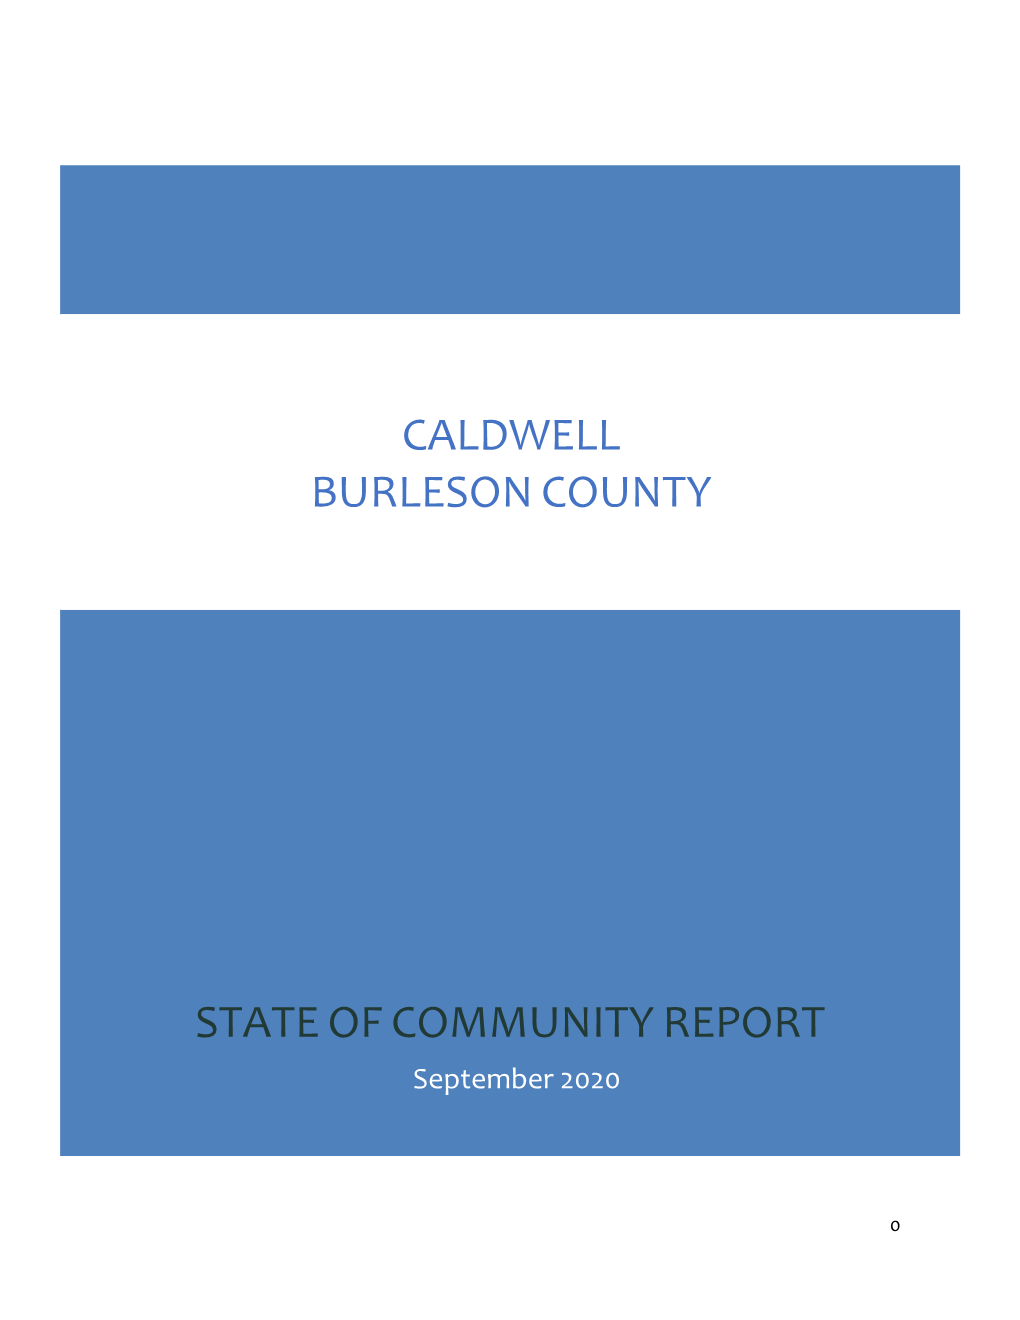 Stateofcommunityreport Caldwell Burlesoncounty